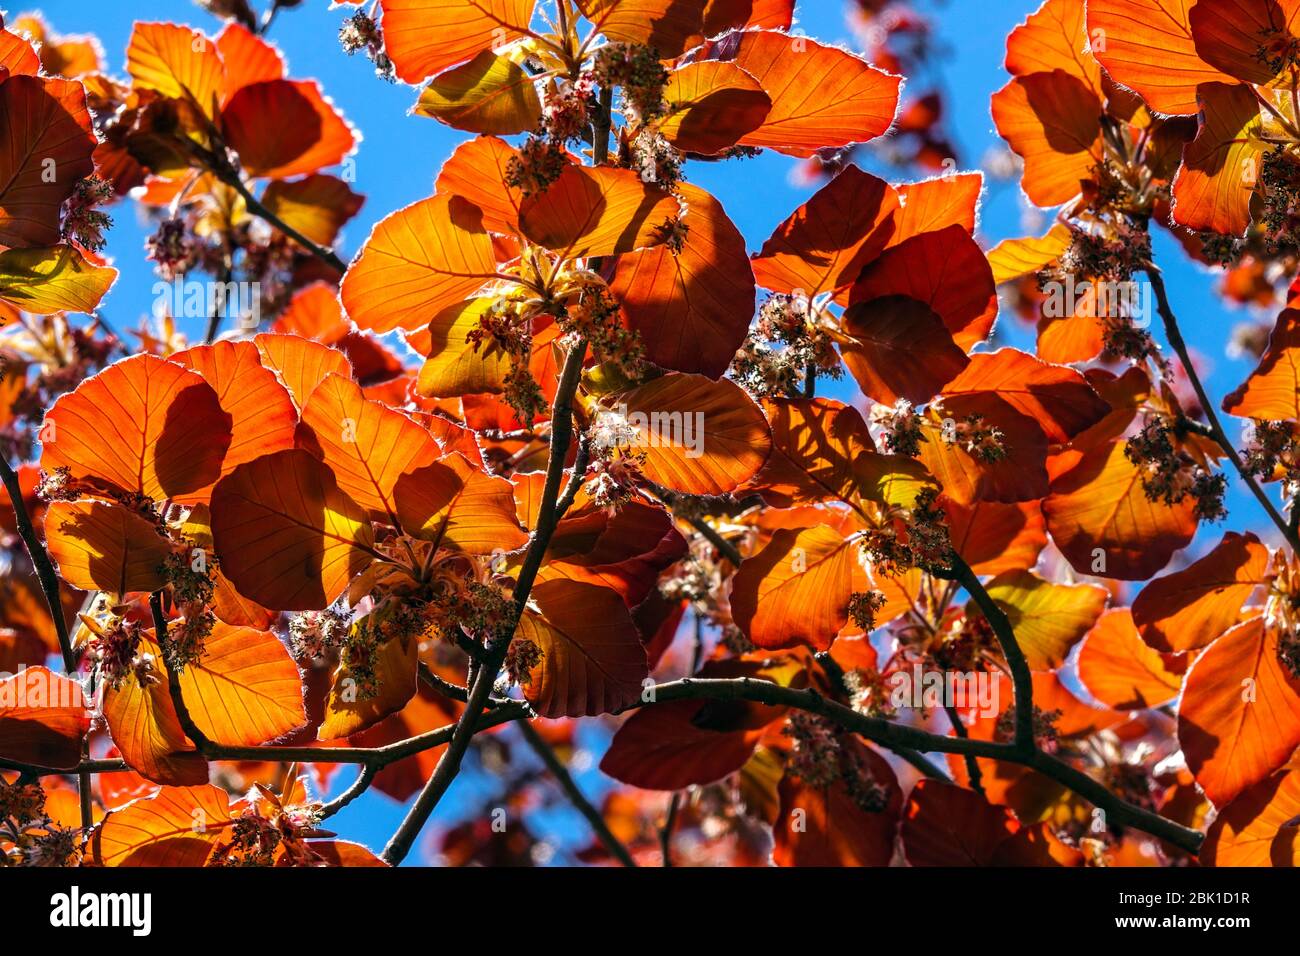 European beech tree Fagus sylvatica 'Atropurpurea' red Leaves sunlight shining through leaves Stock Photo